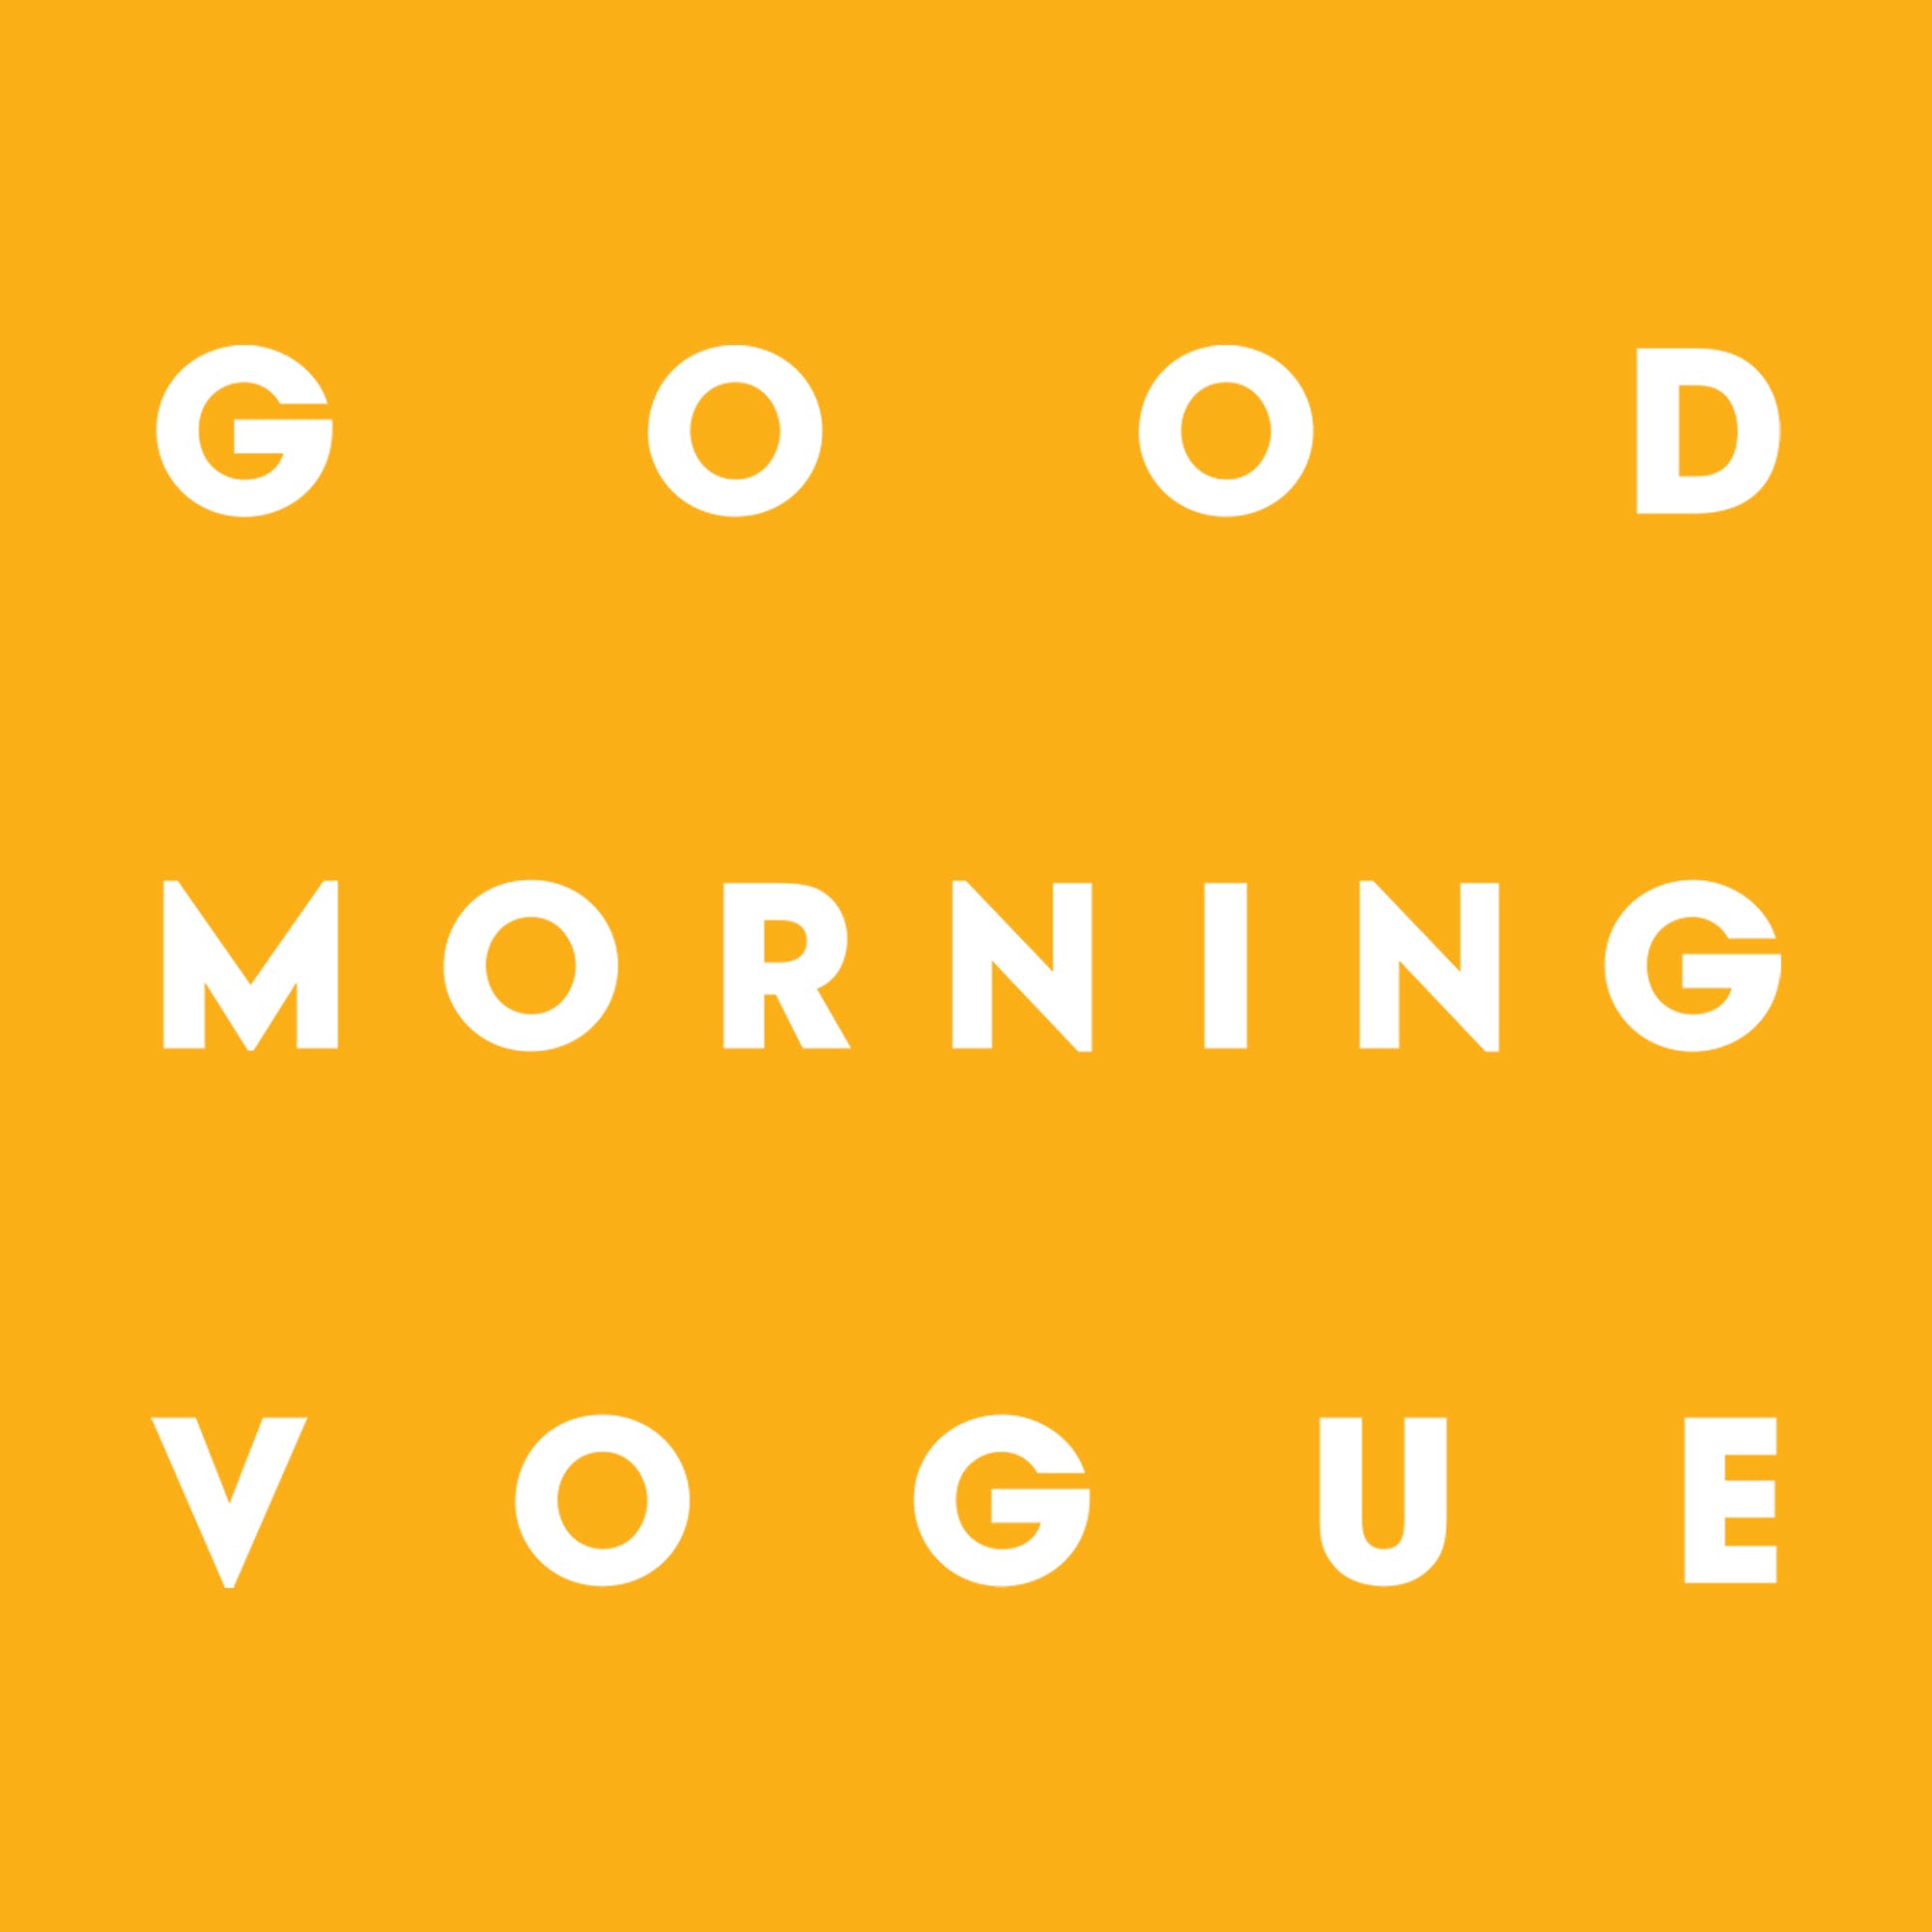 Good Morning Vogue: Simone Rocha Is Bringing Femininity and Frills to the Mainstream